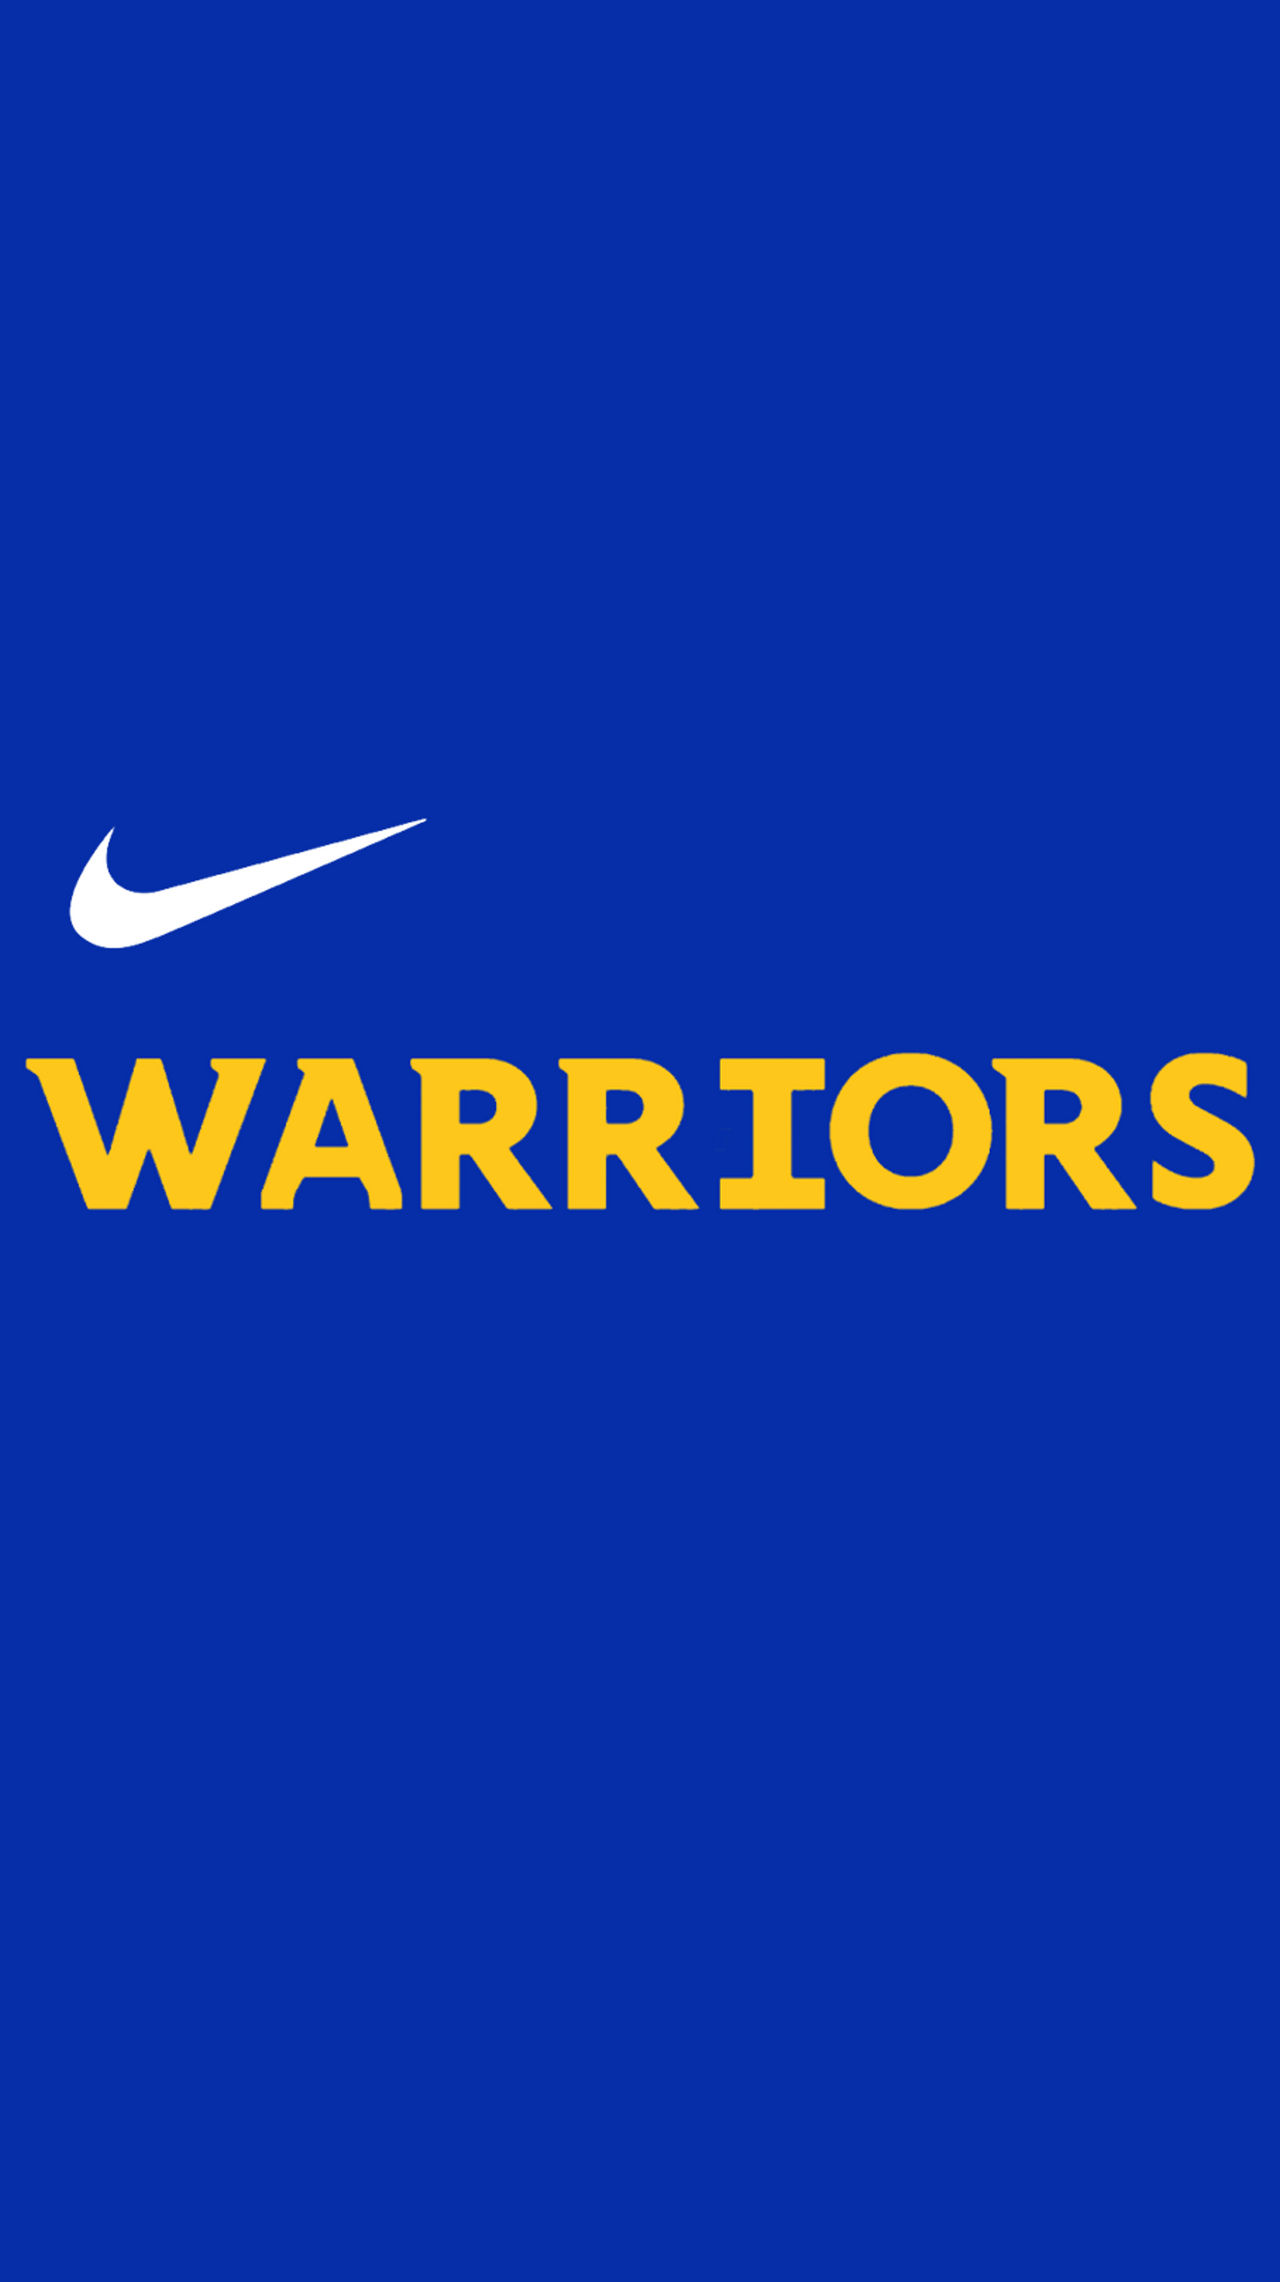 Golden State Warriors Wordmark Logo Wallpaper by llu258 on DeviantArt